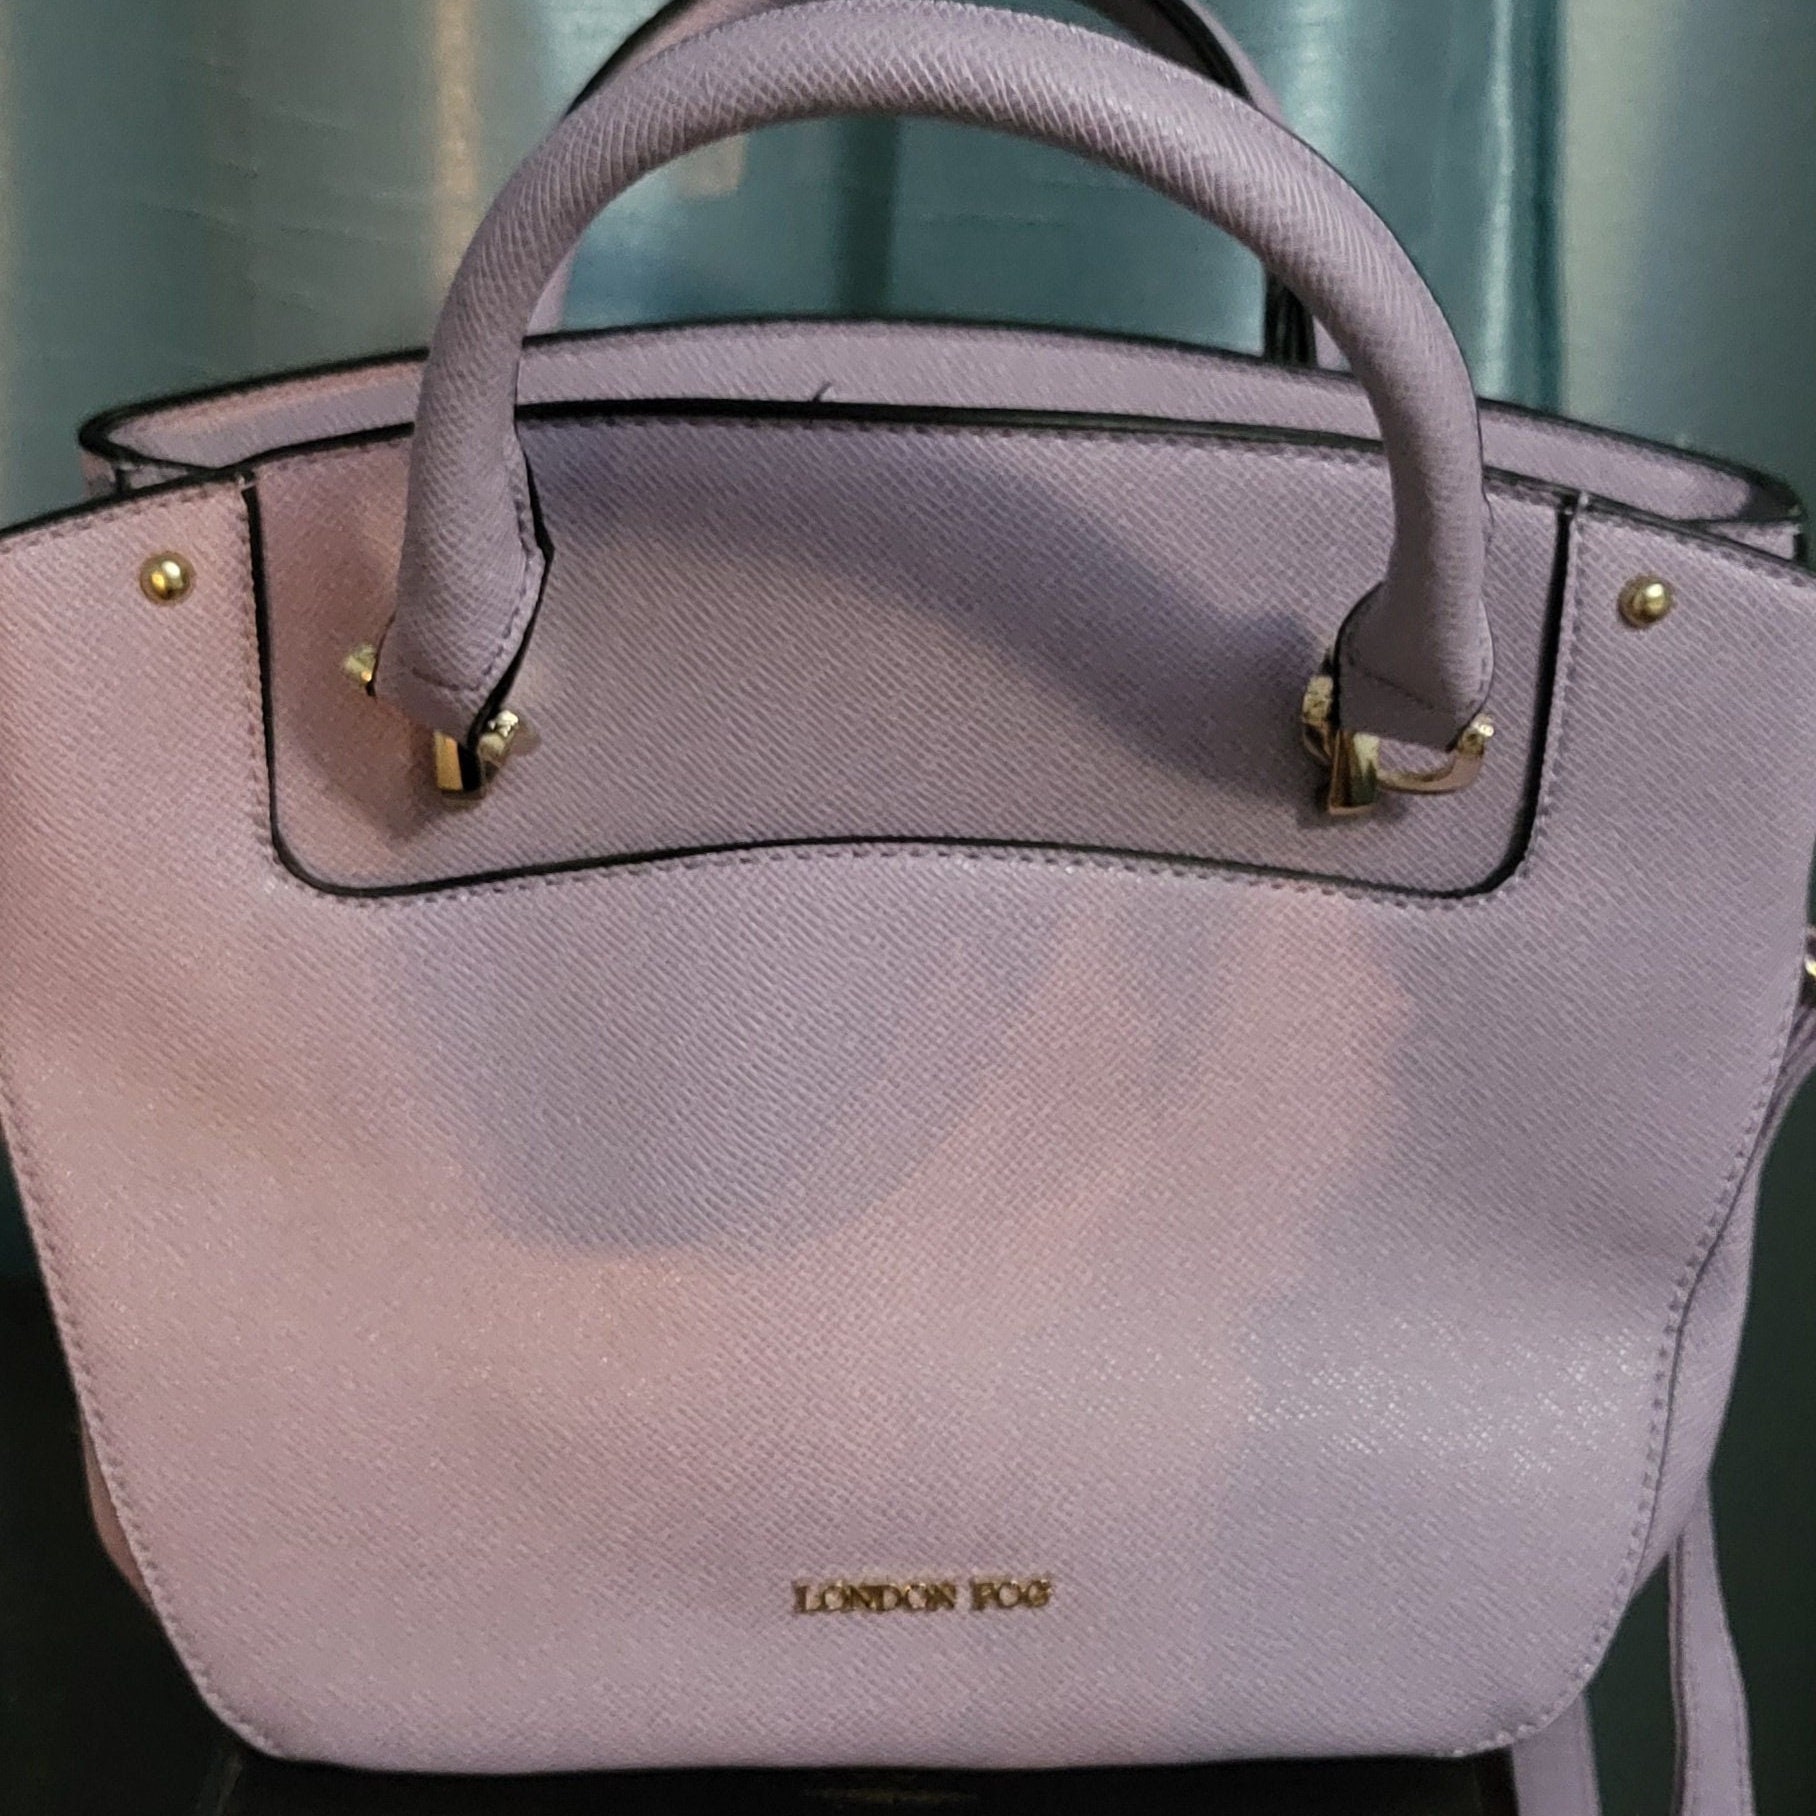 London Fog light pink purse on Mercari | Light pink purse, Pink purse,  Givency antigona bag